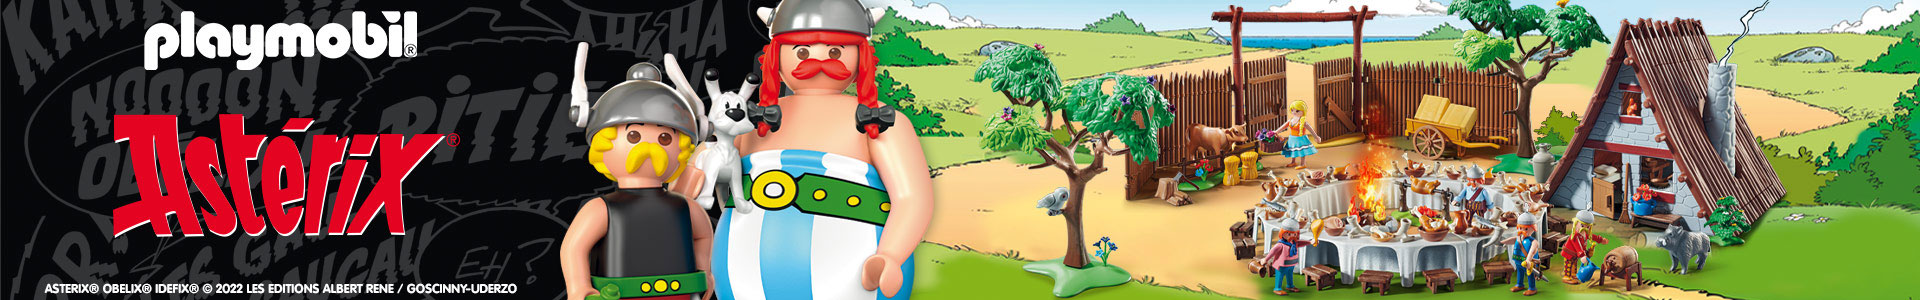 Playmobil - Asterix